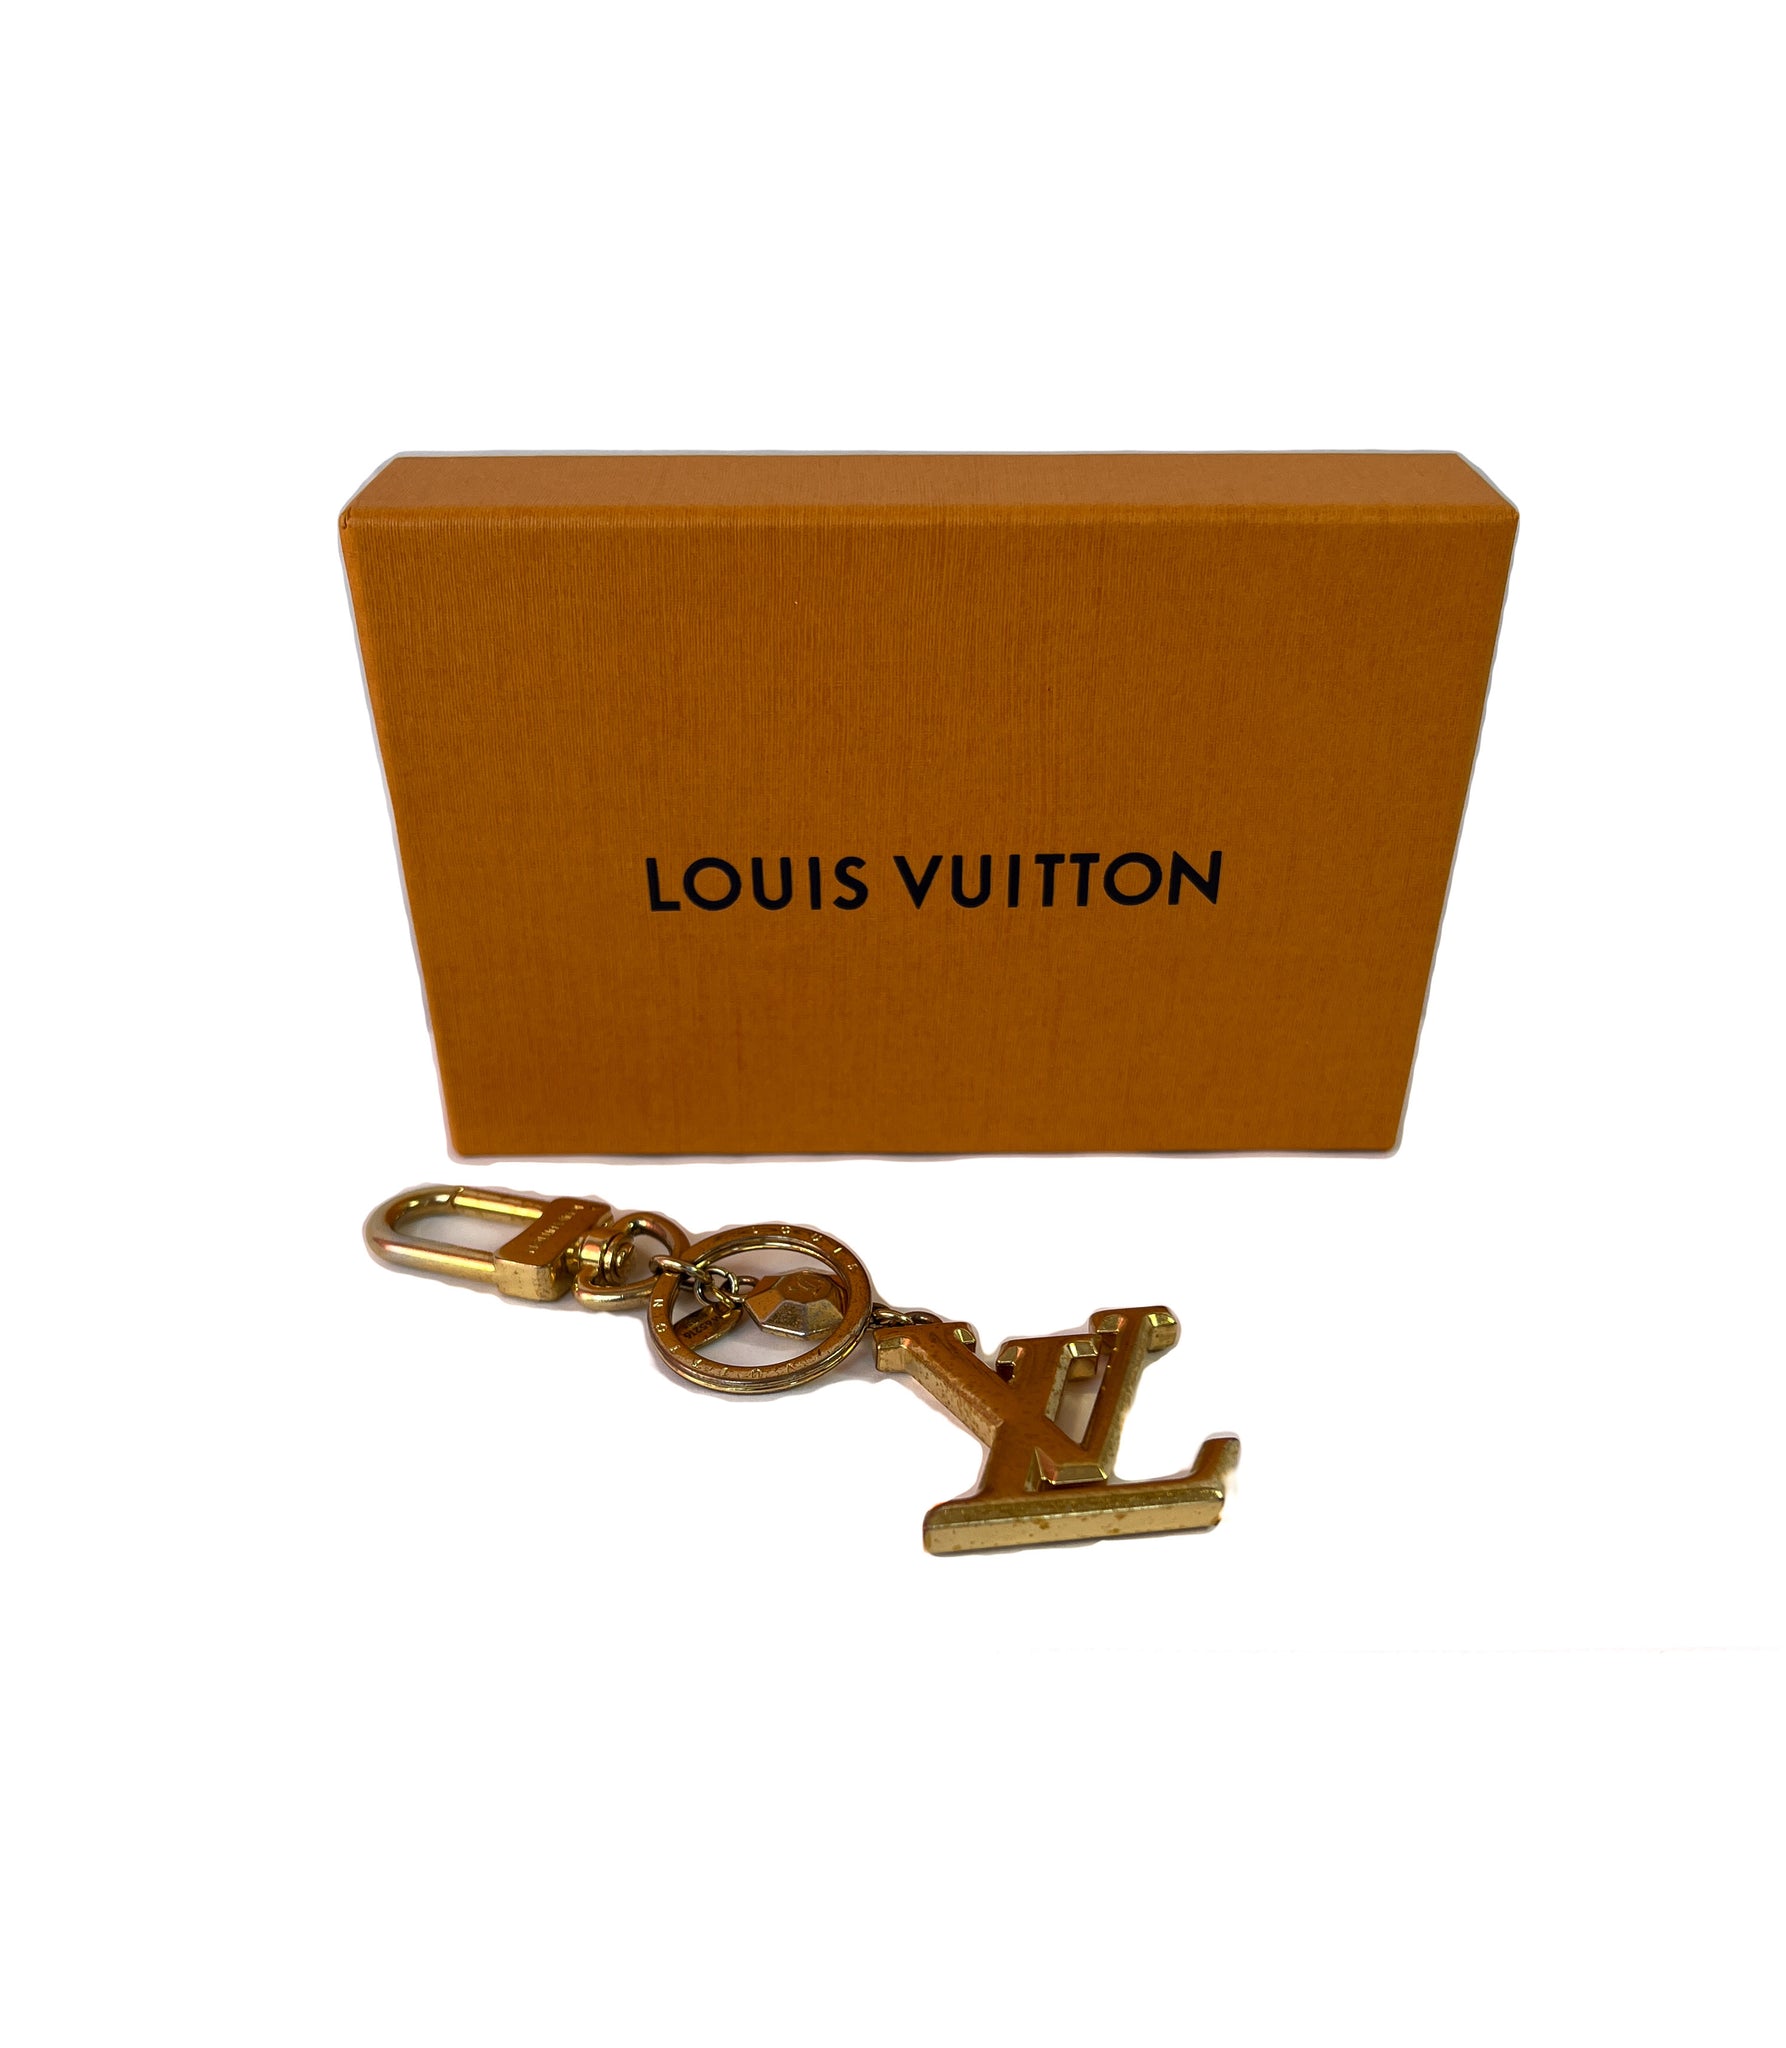 Louis Vuitton facettes bag charm & key holder – My Girlfriend's